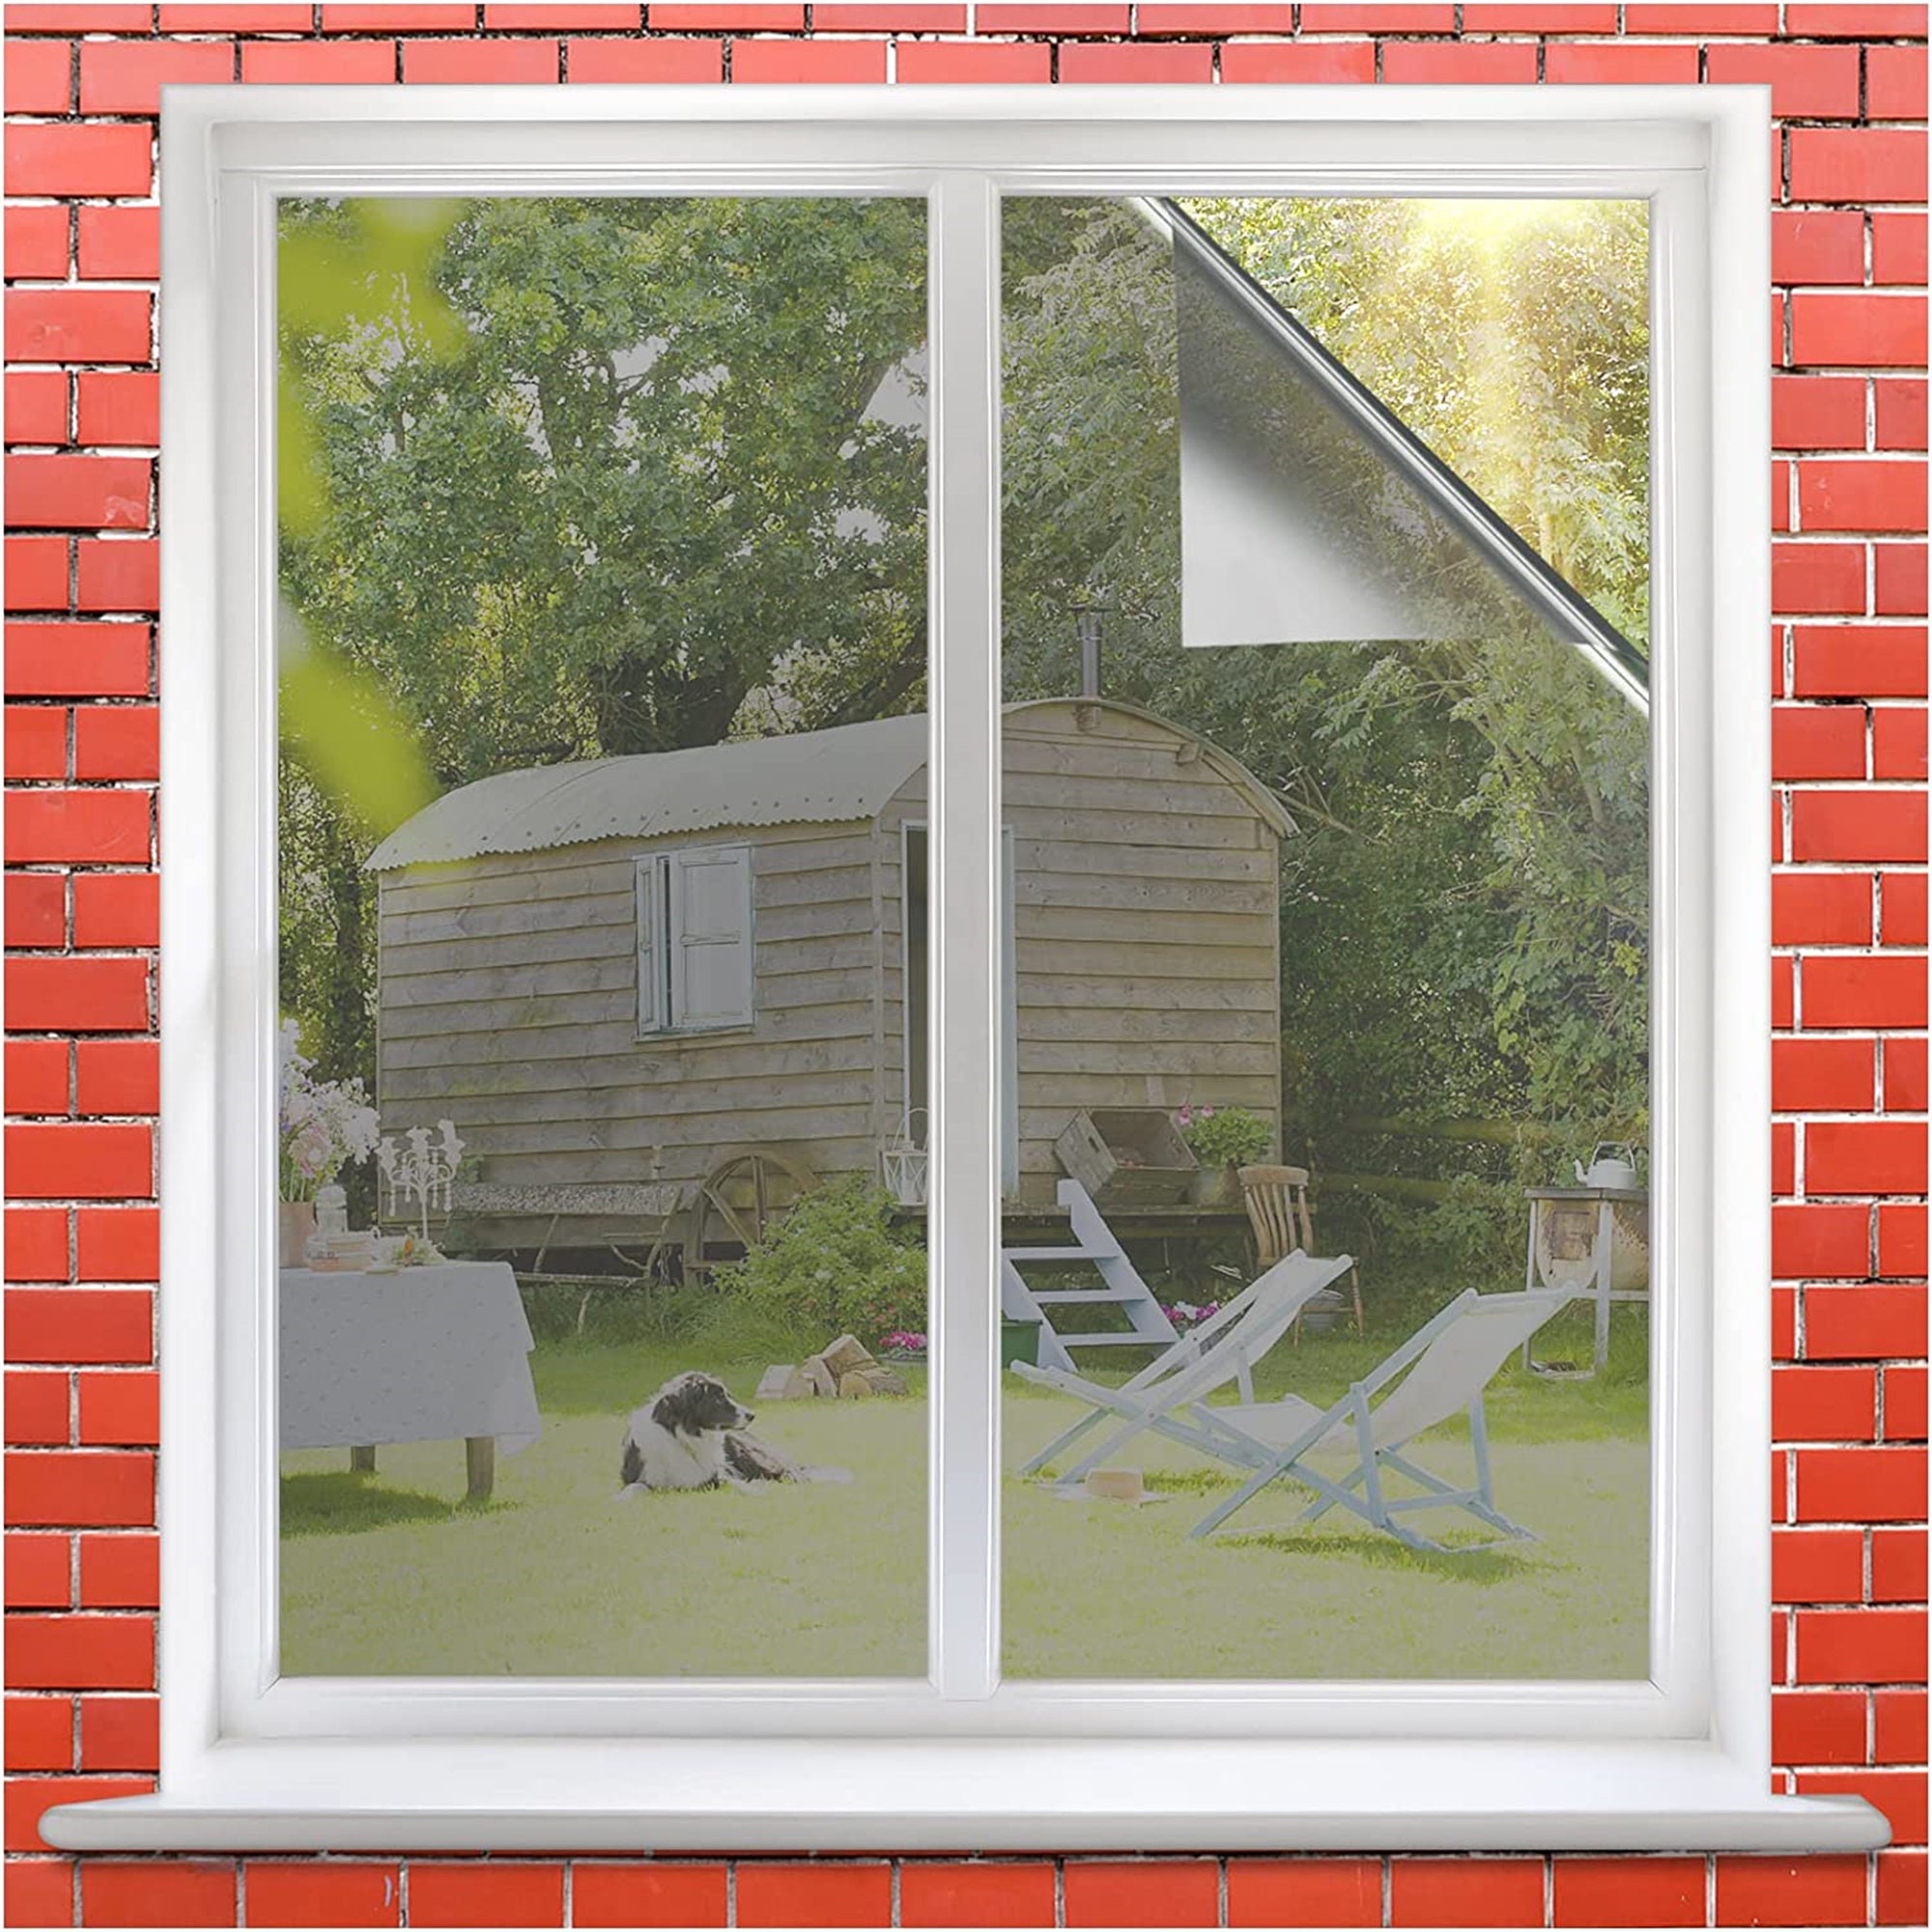 Mirror Window Film, Privacy Self-adhesive Film, Anti UV Heat Control,  Reflective Window Tint for Home Office,sun Protection Film, Home Decor 